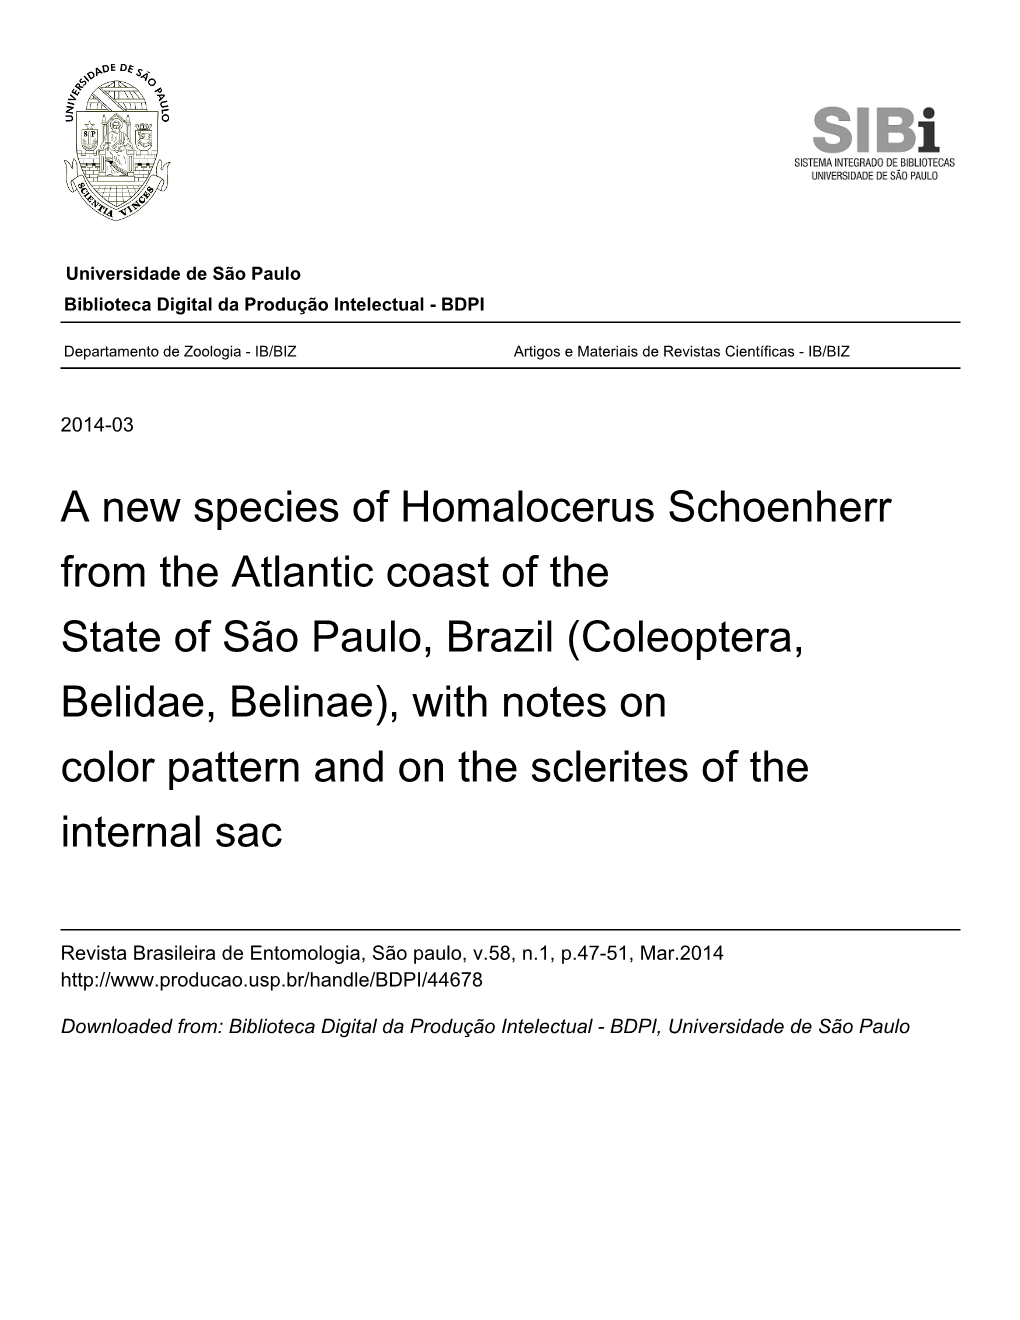 A New Species of Homalocerus Schoenherr from the Atlantic Coast Of